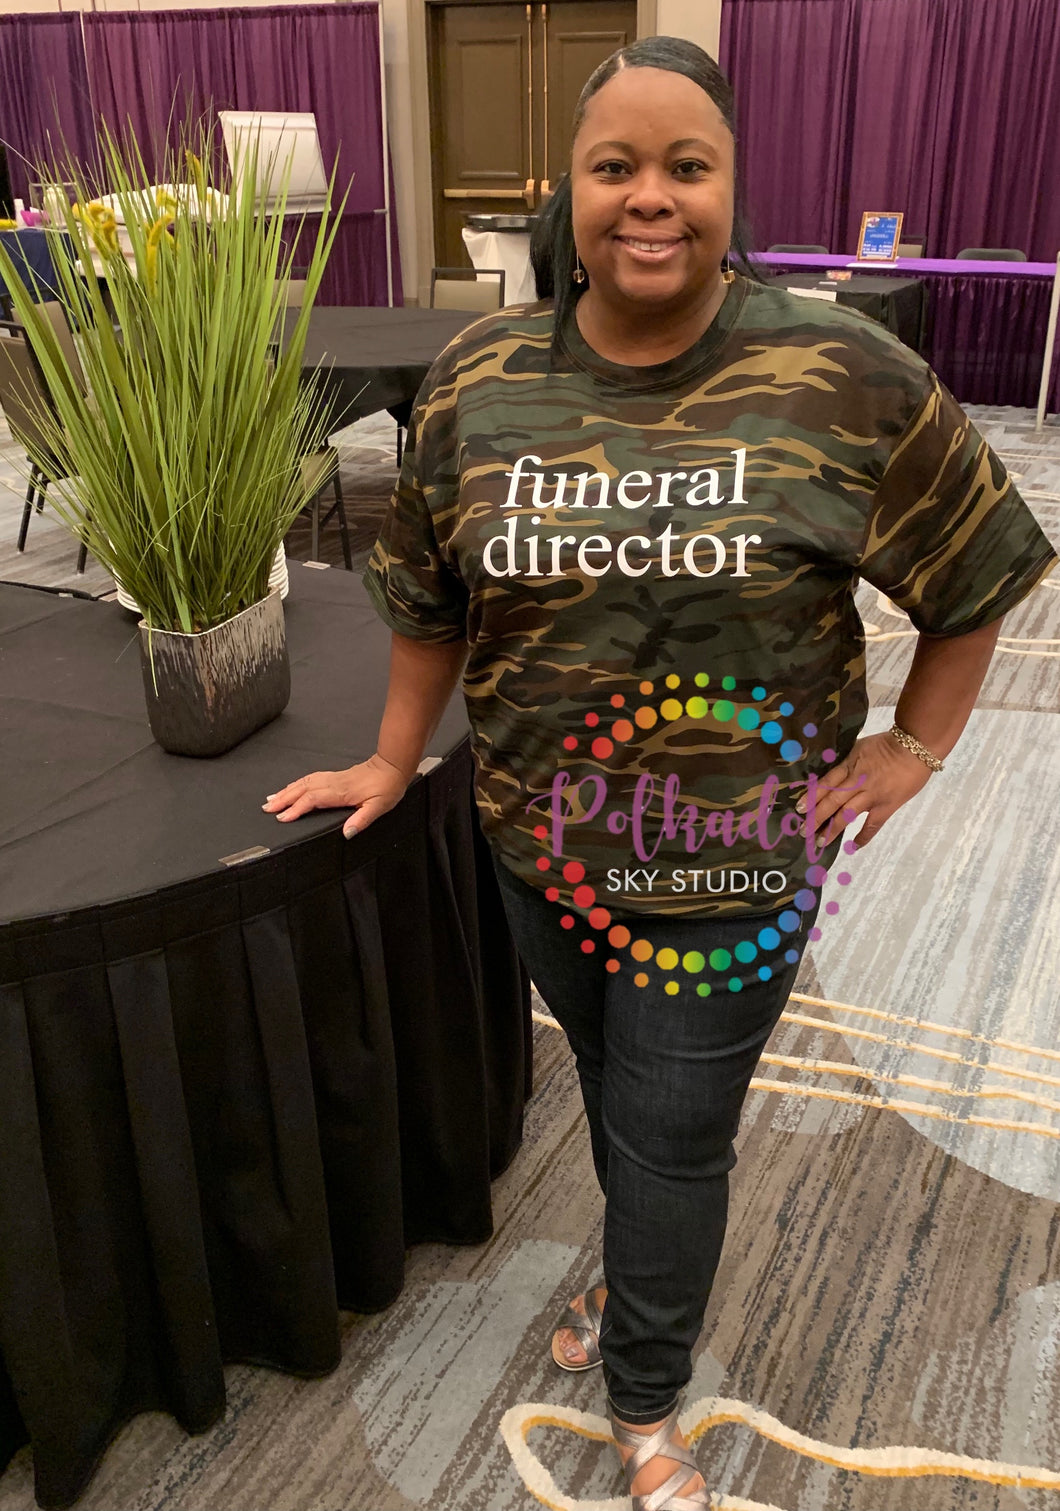 Camo Funeral Director Tshirt